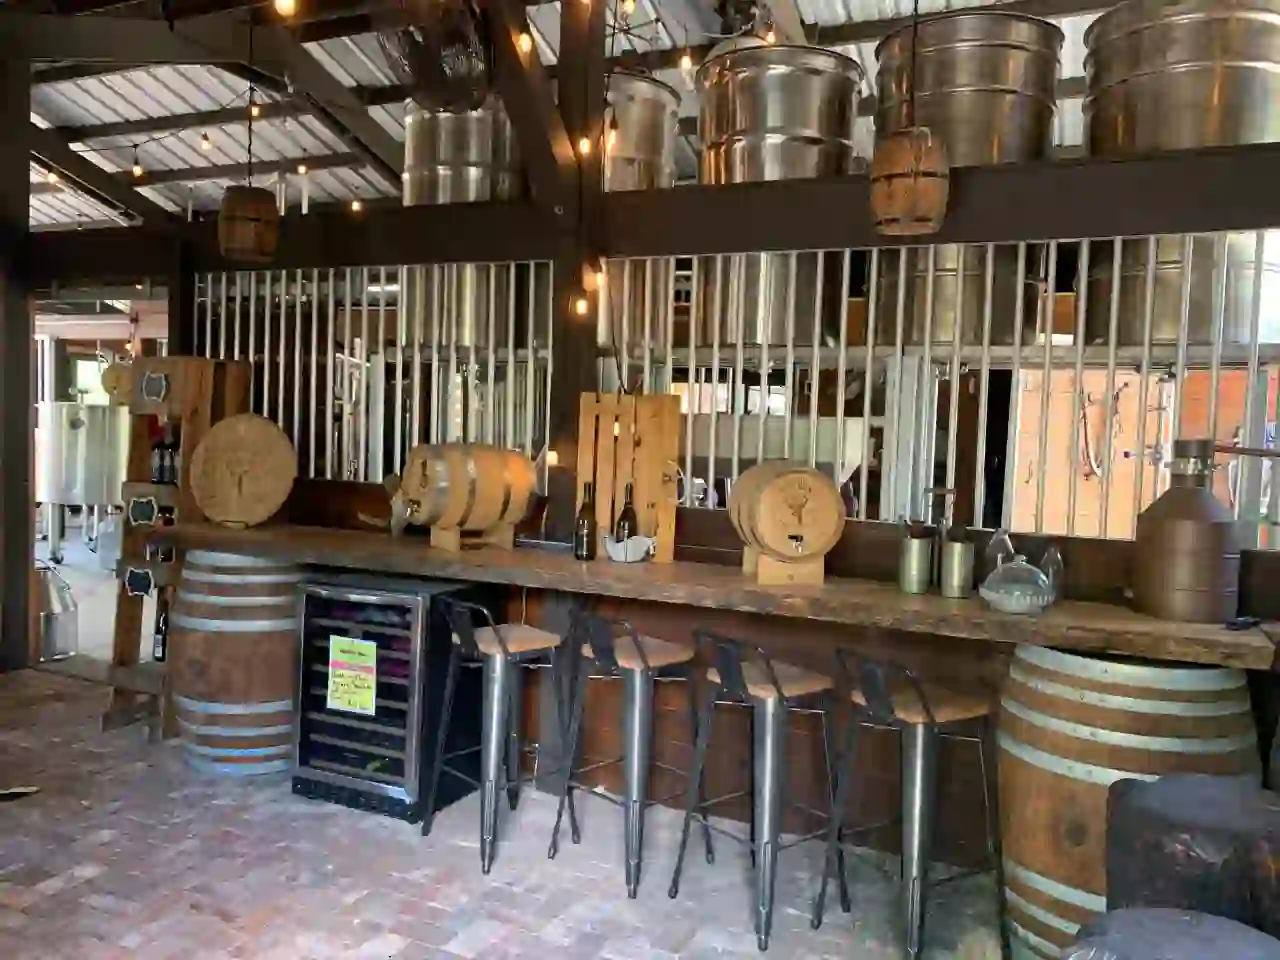 My First Visit to Njoy Spirits Distillery - Bar in Barn